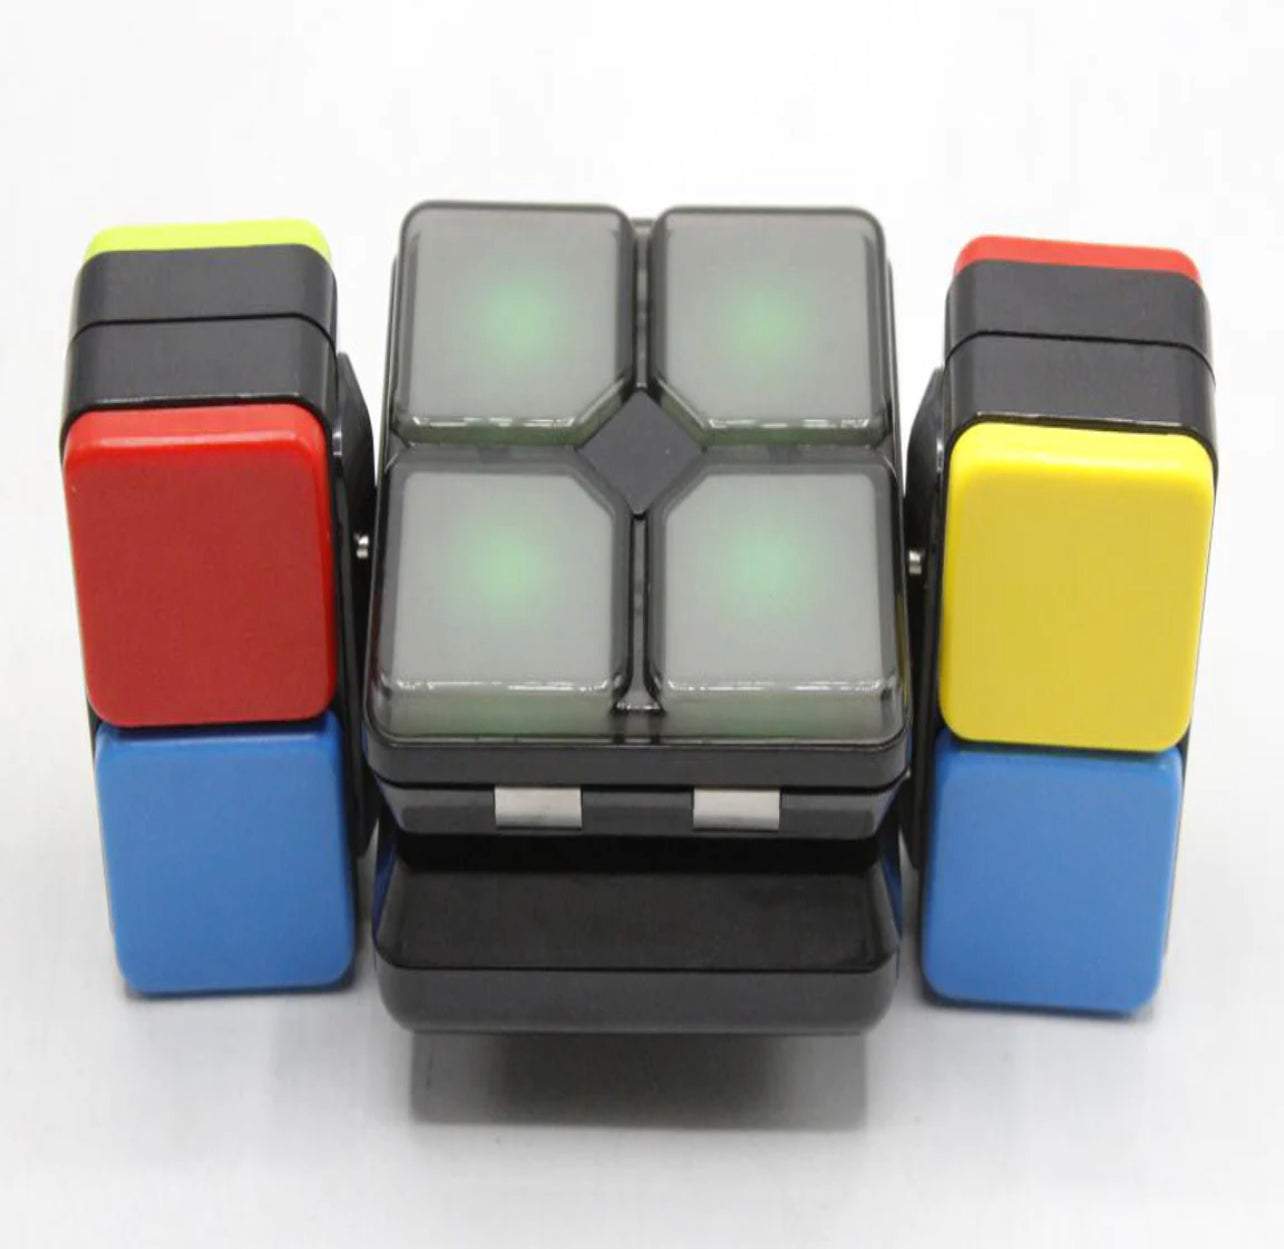 Music Variety Rubik’s Cube || لعبة مكعب روبيك الموسيقي